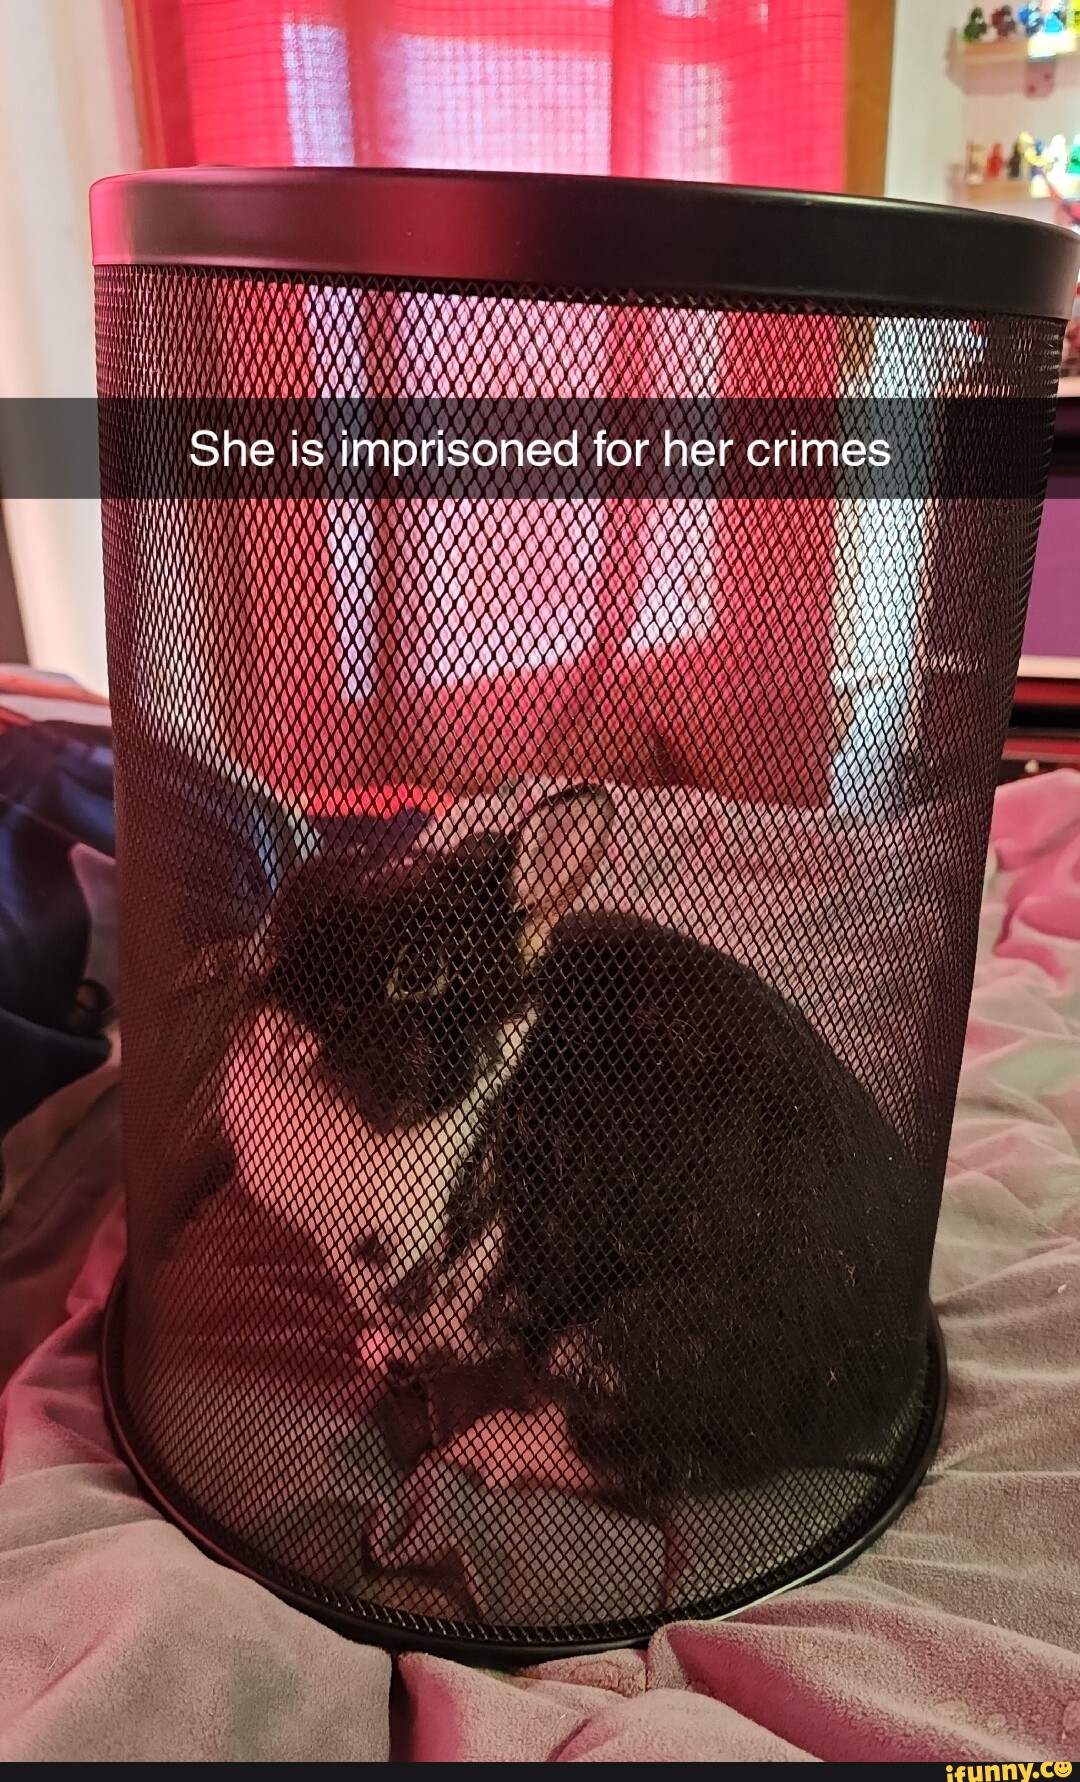 She is imprisoned for her crimes